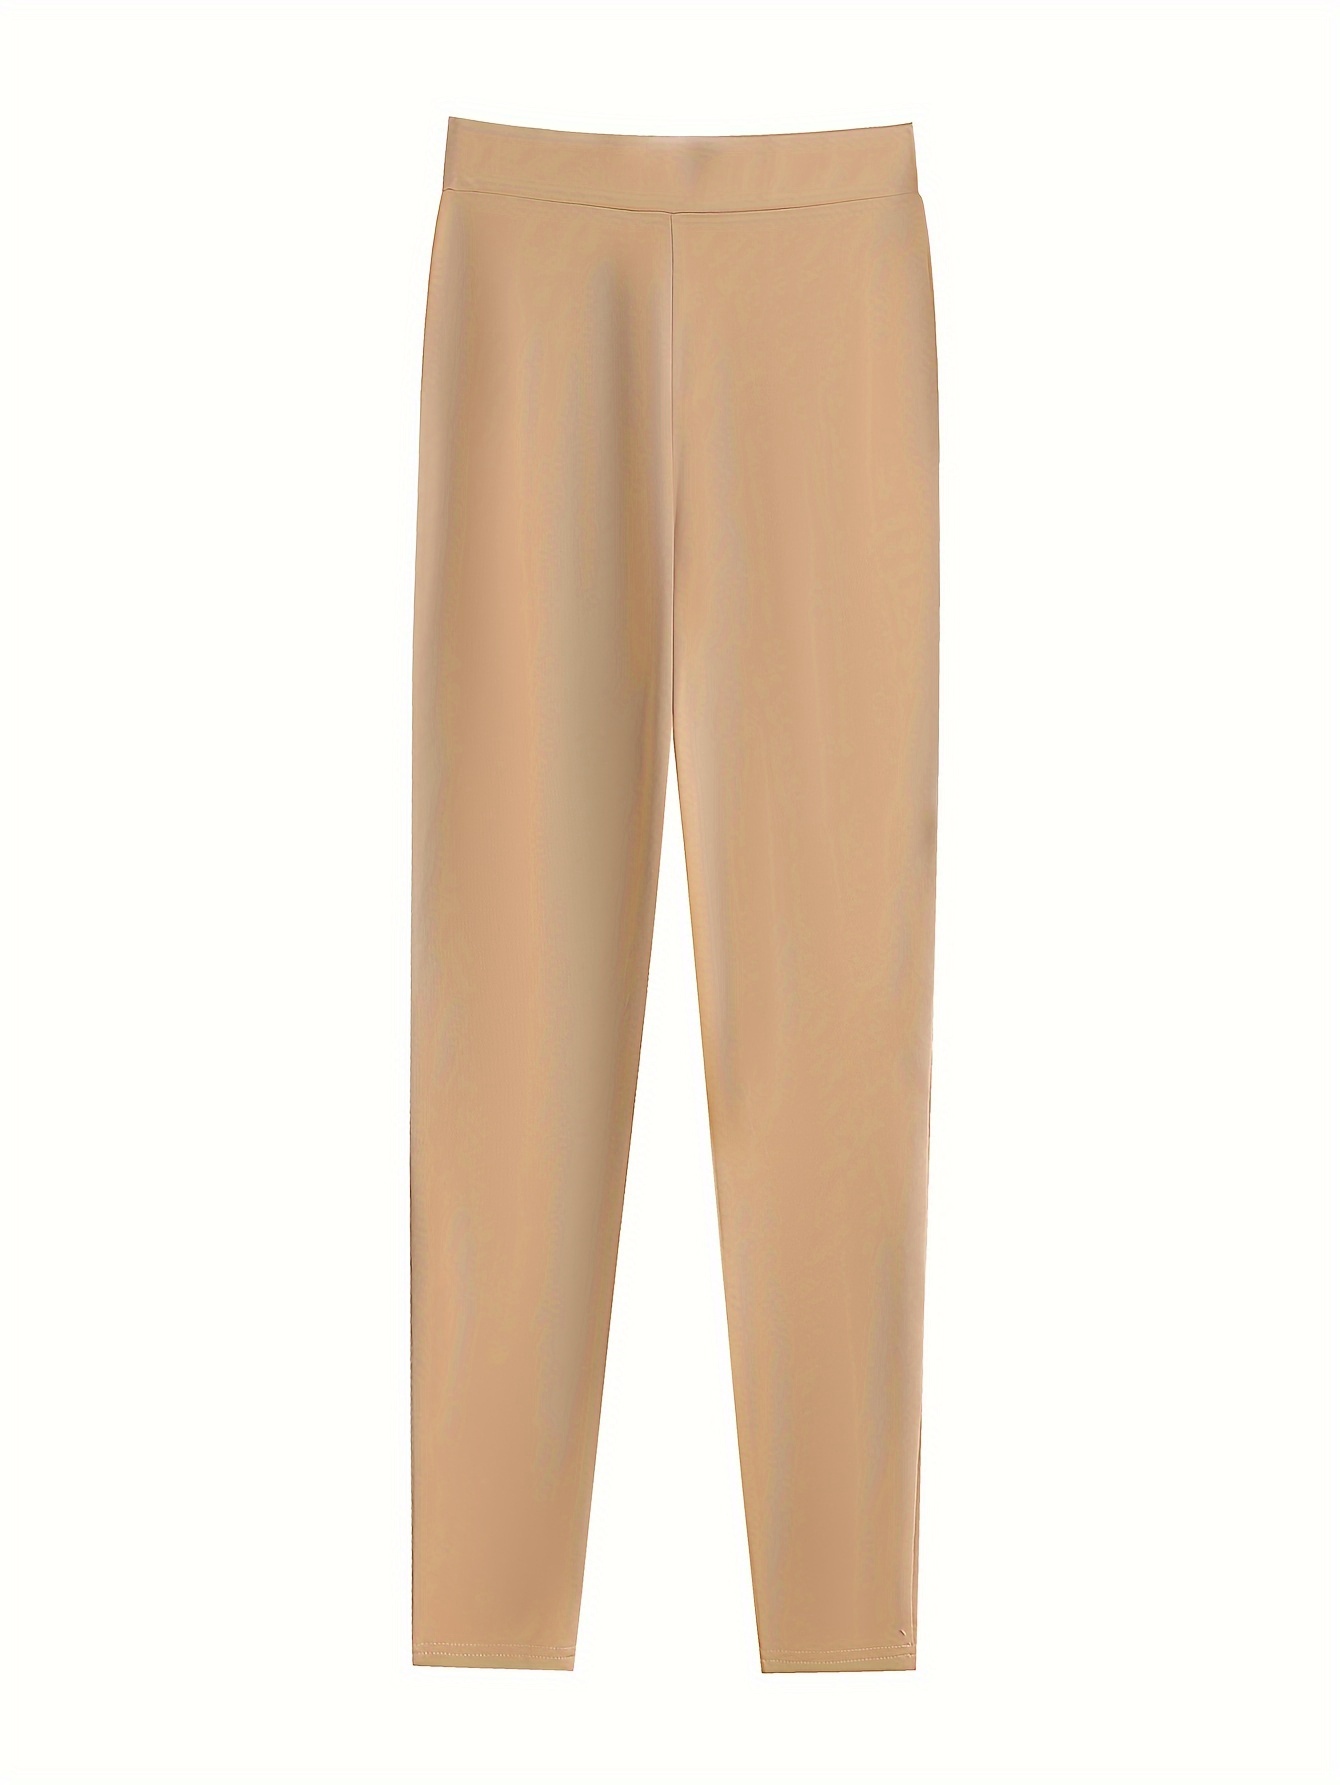 Zara Women's Leggings Xs Brown Polyester with Elastane